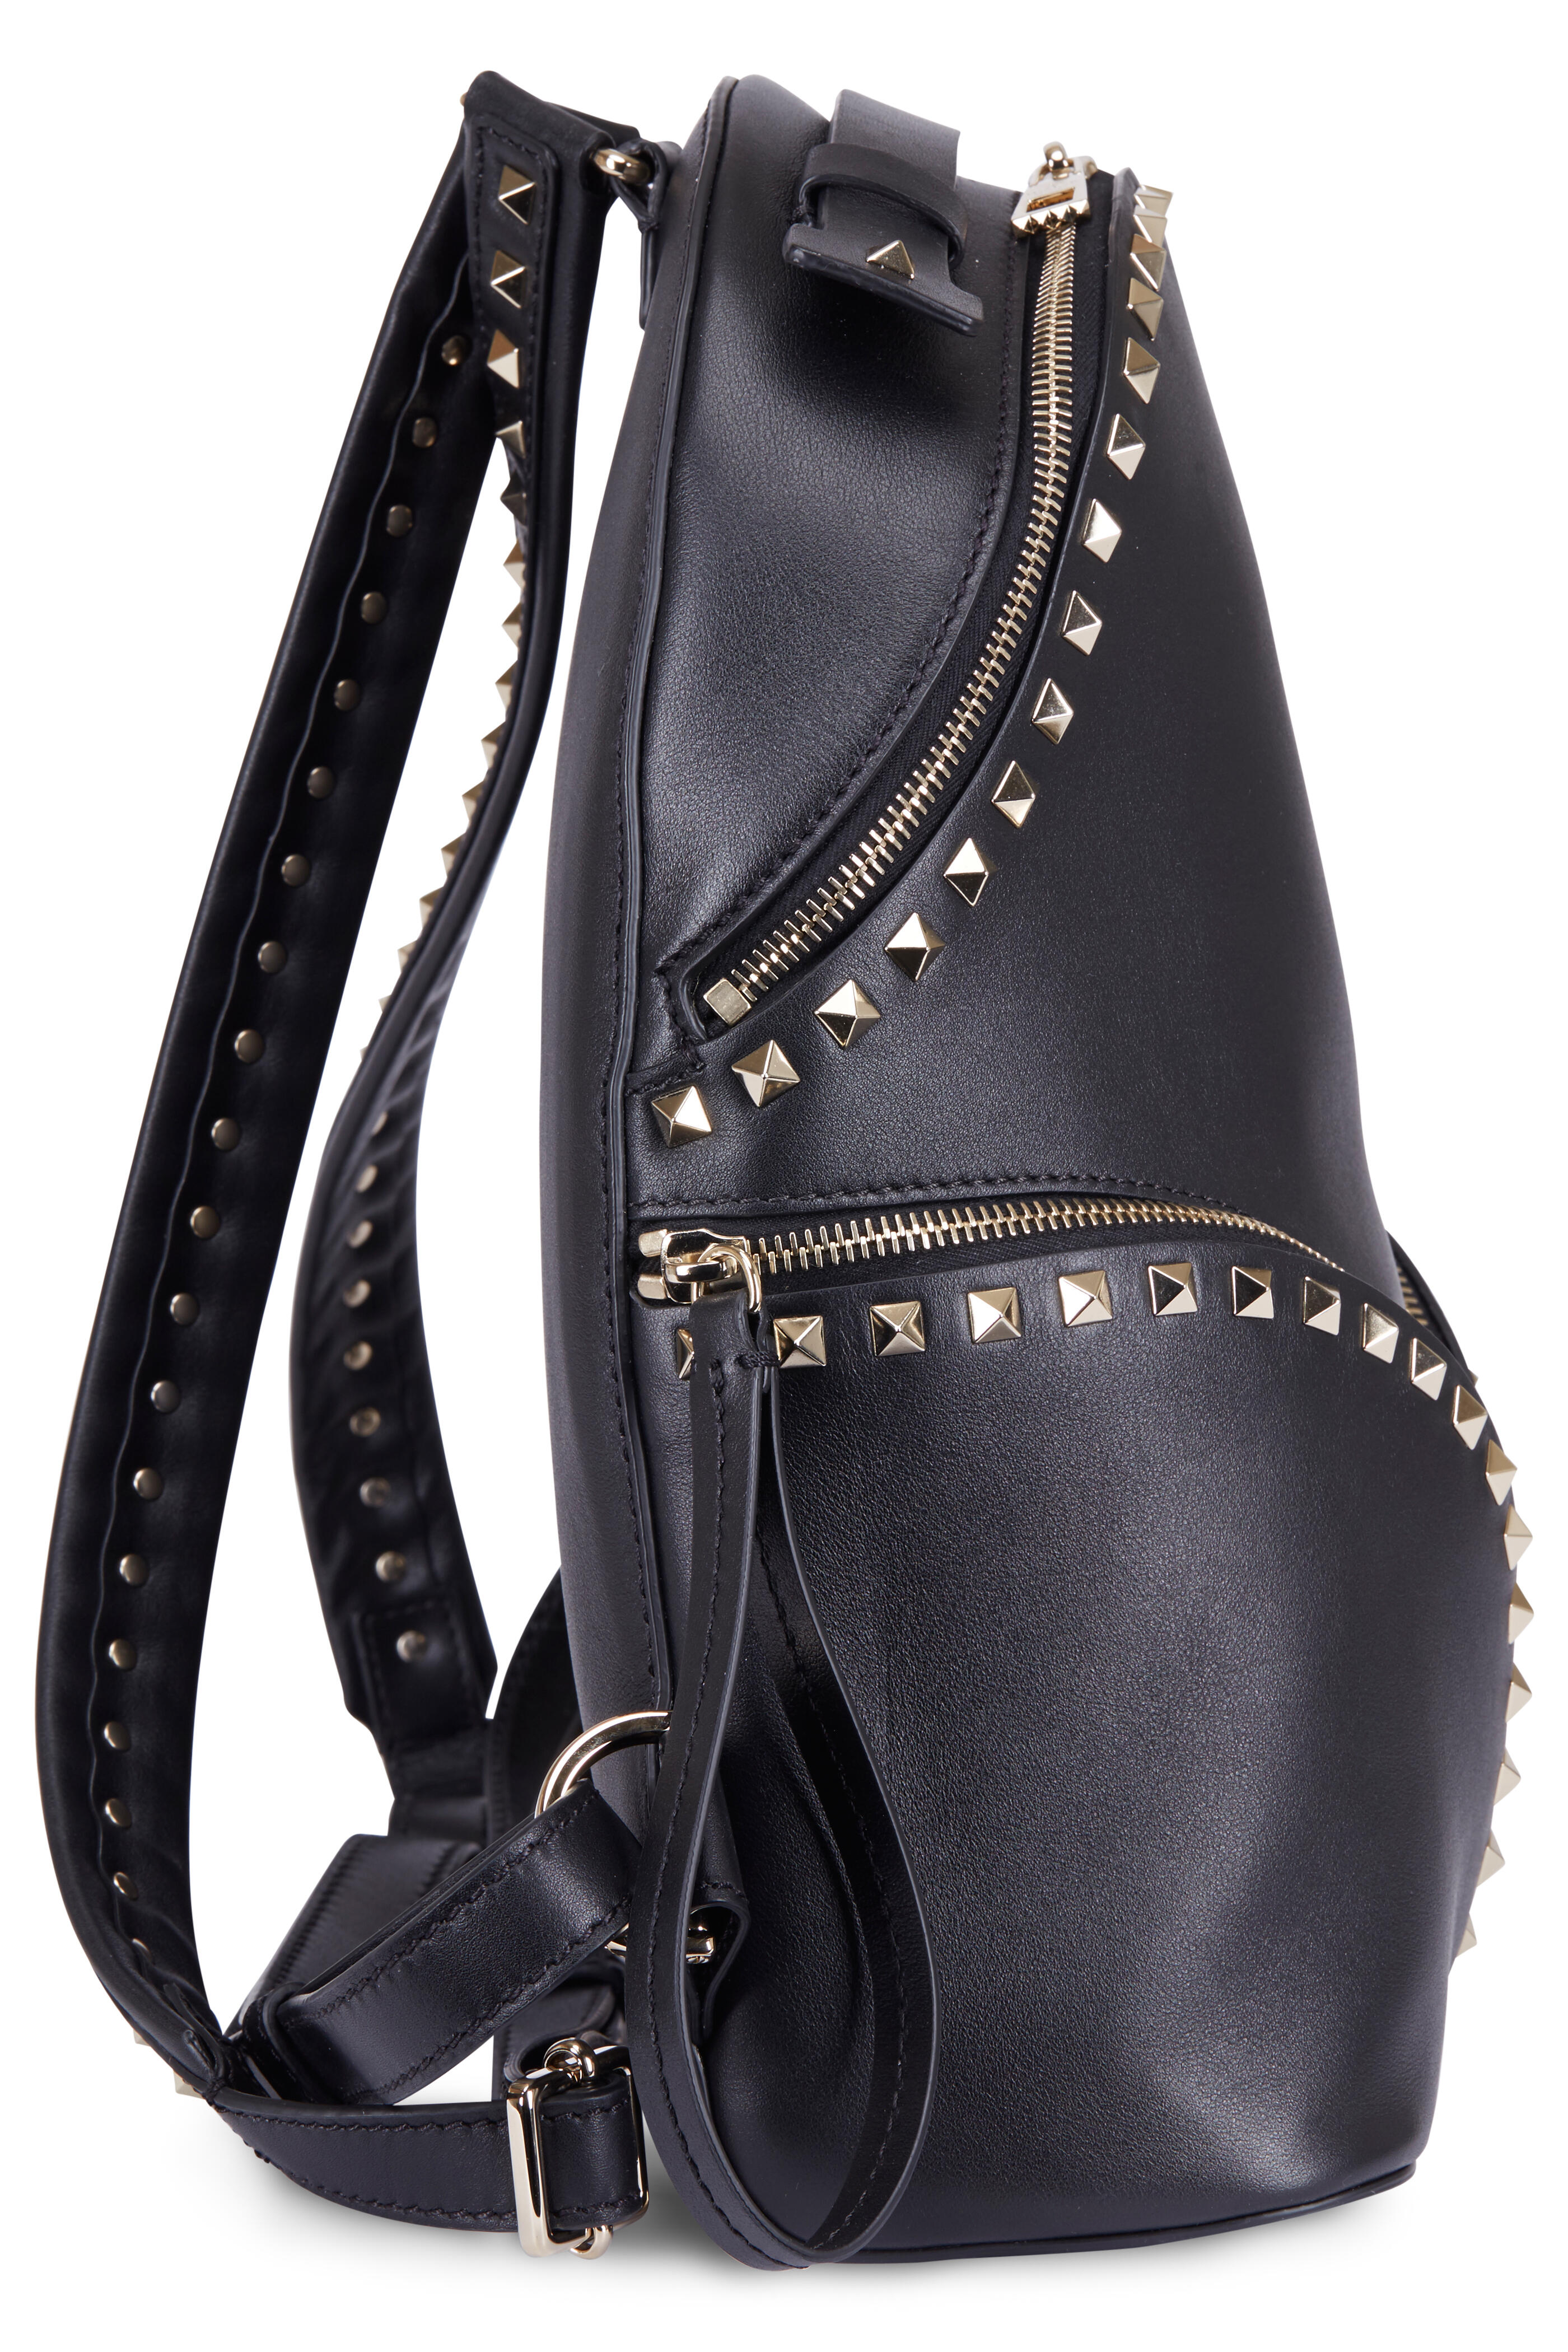 Valentino Rockstud backpack in black leather